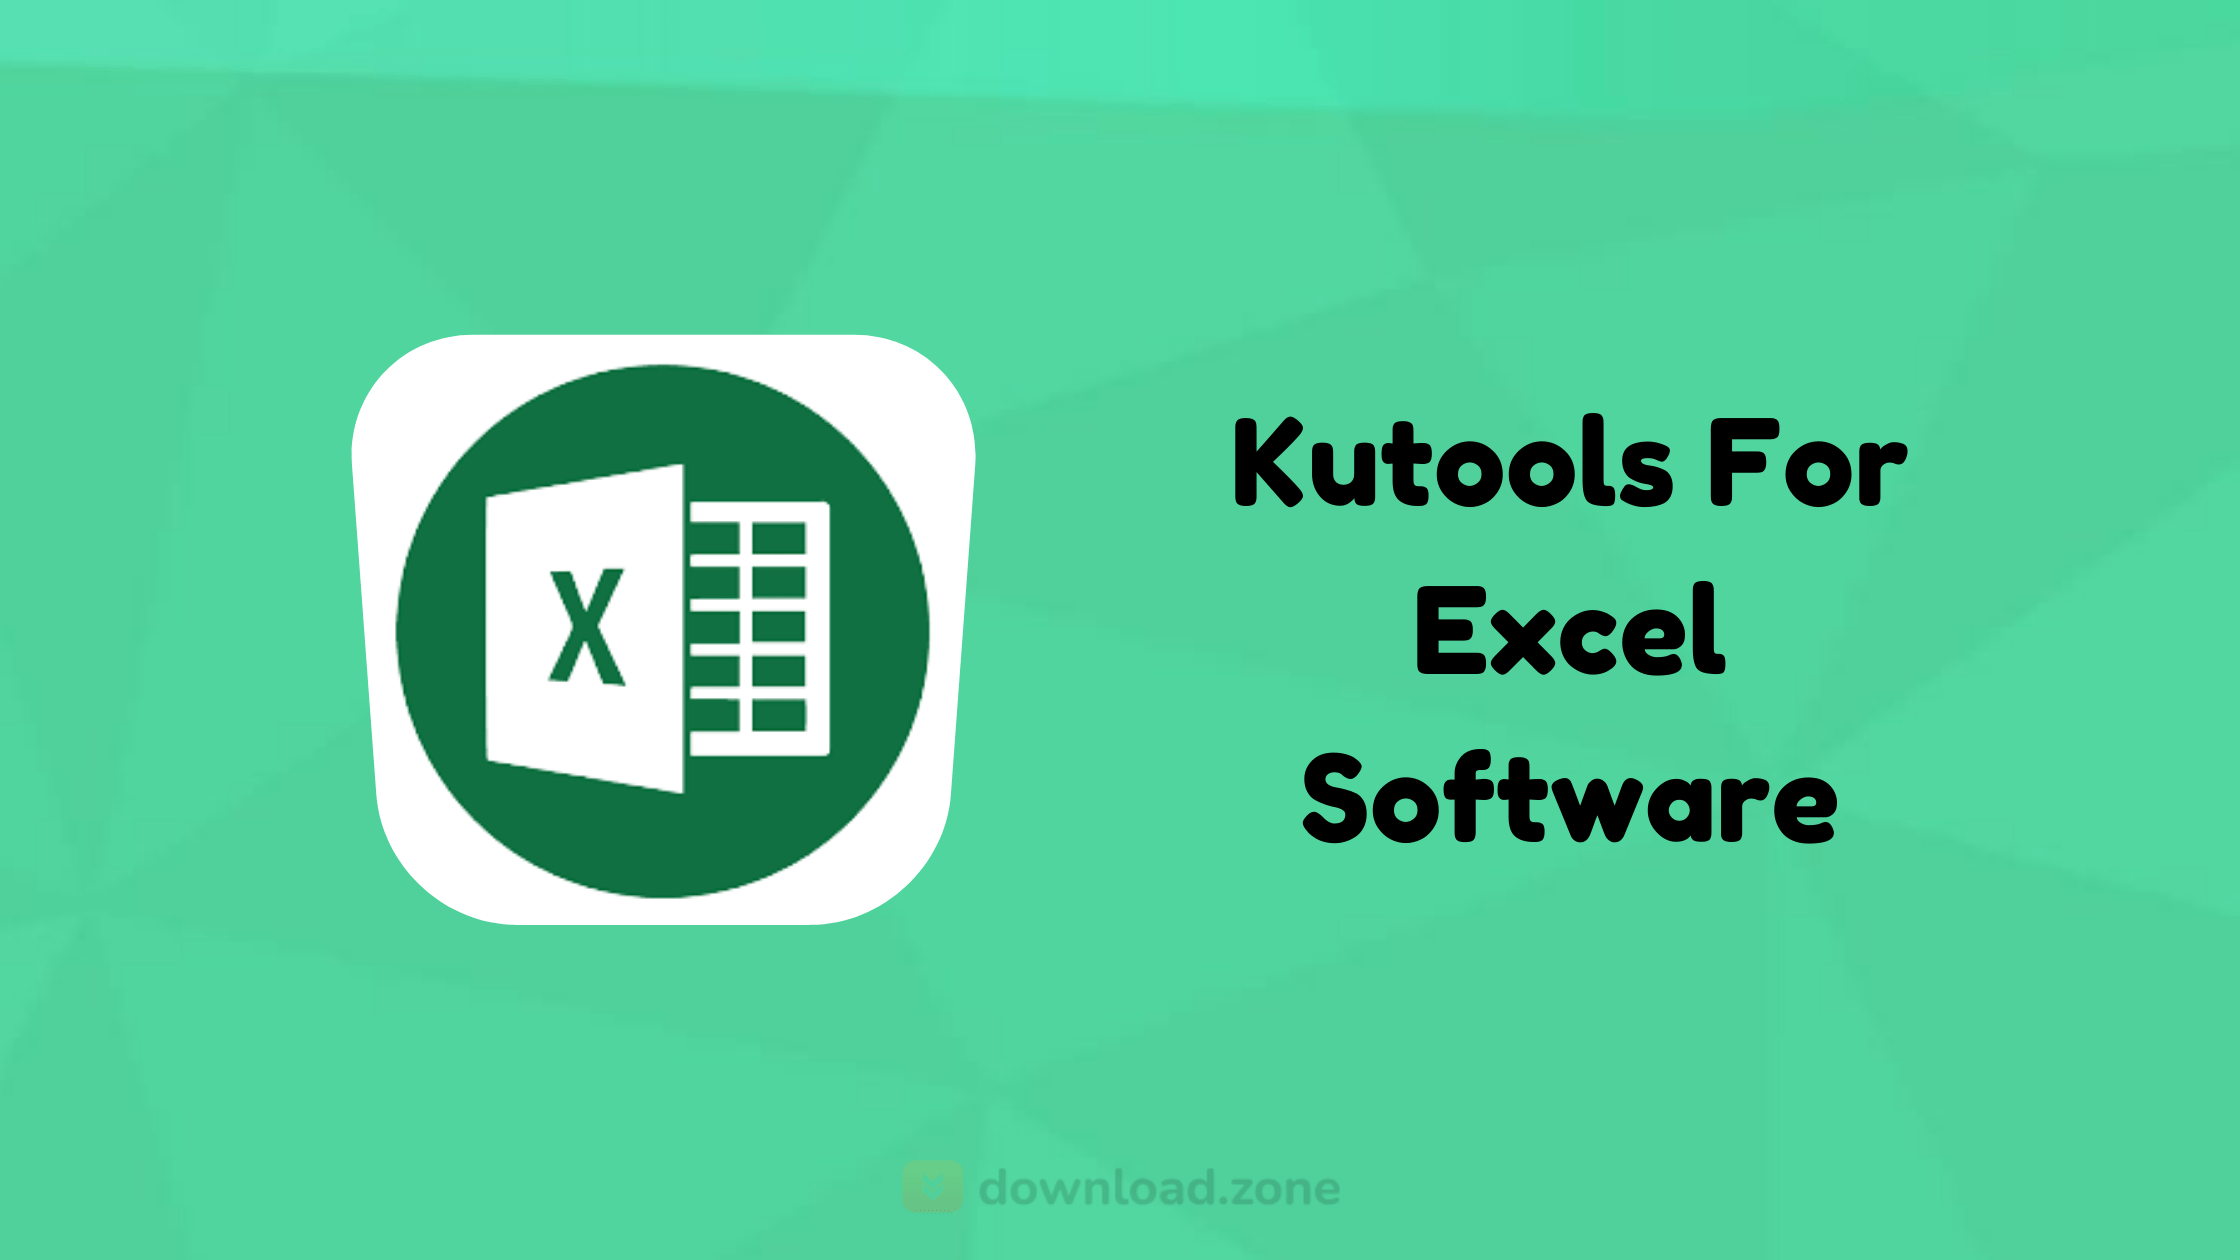 kutools excel workbook in new window not tab